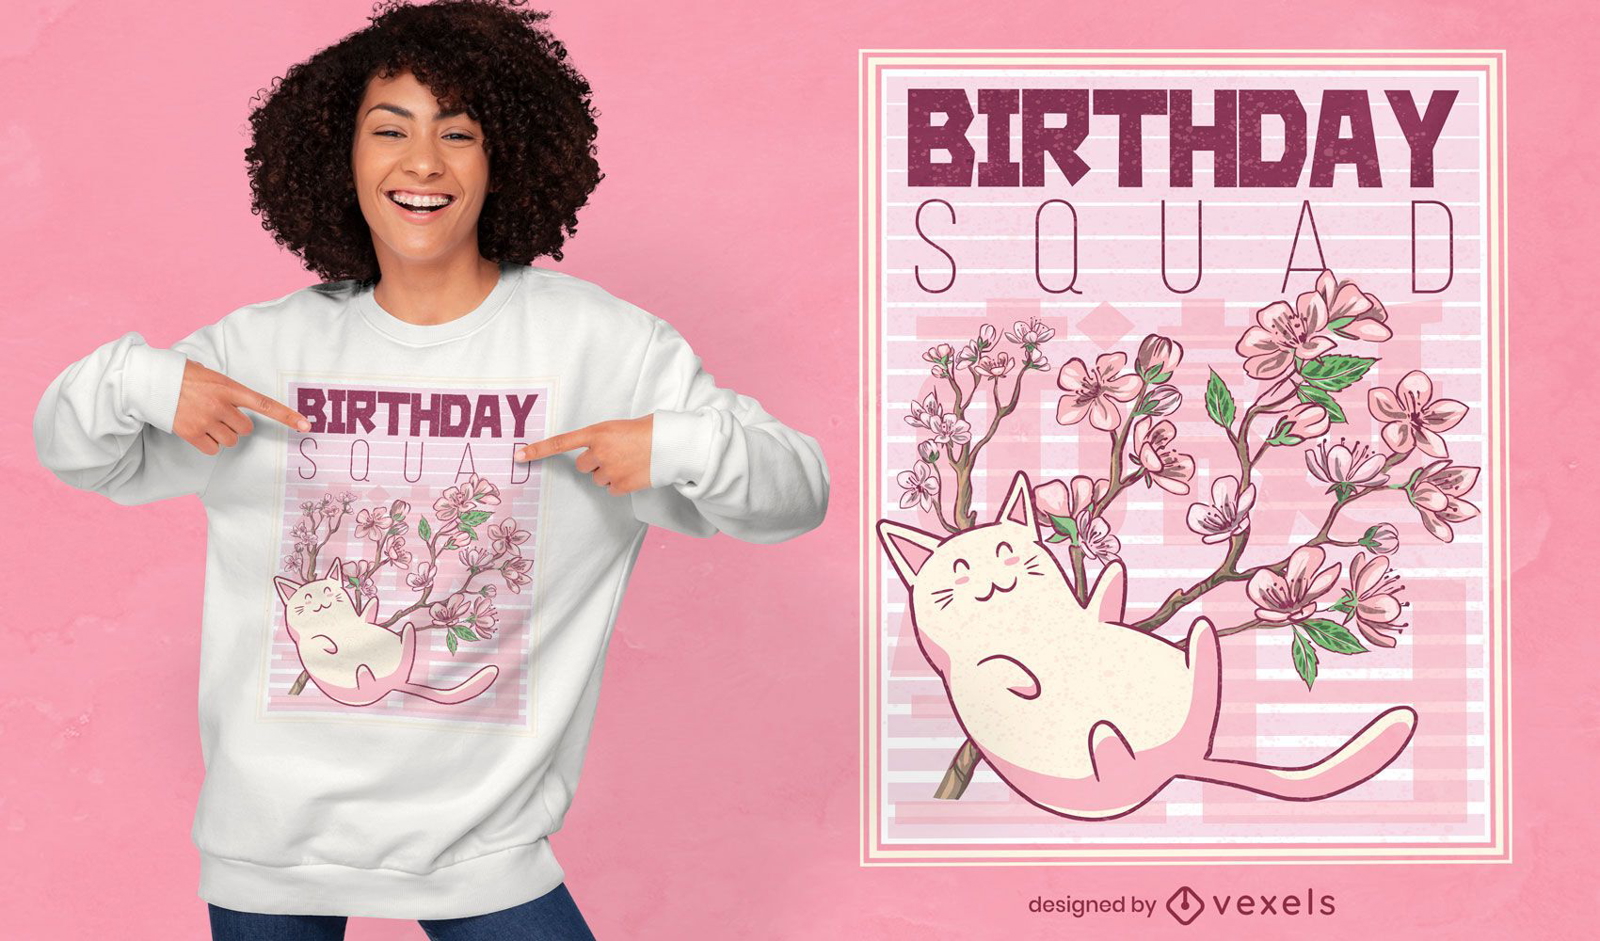 Birthday squad t-shirt design